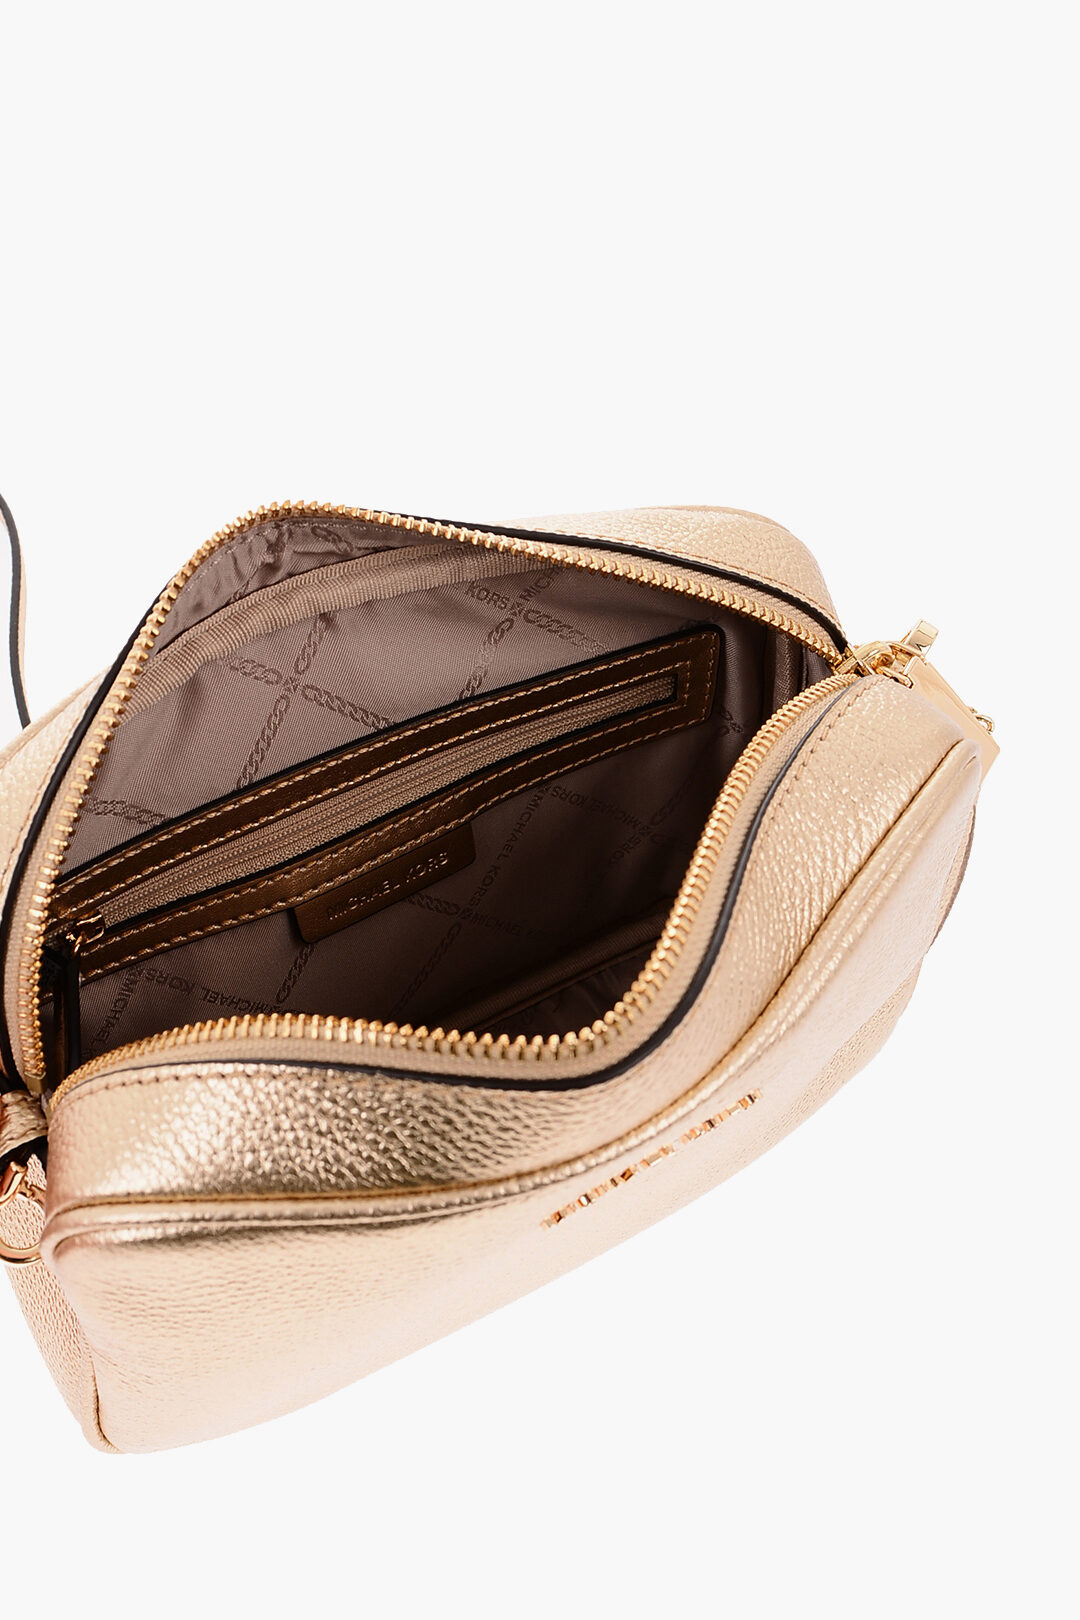 Michael Kors Lamè Leather JET SET Crossbody Bag women - Glamood Outlet